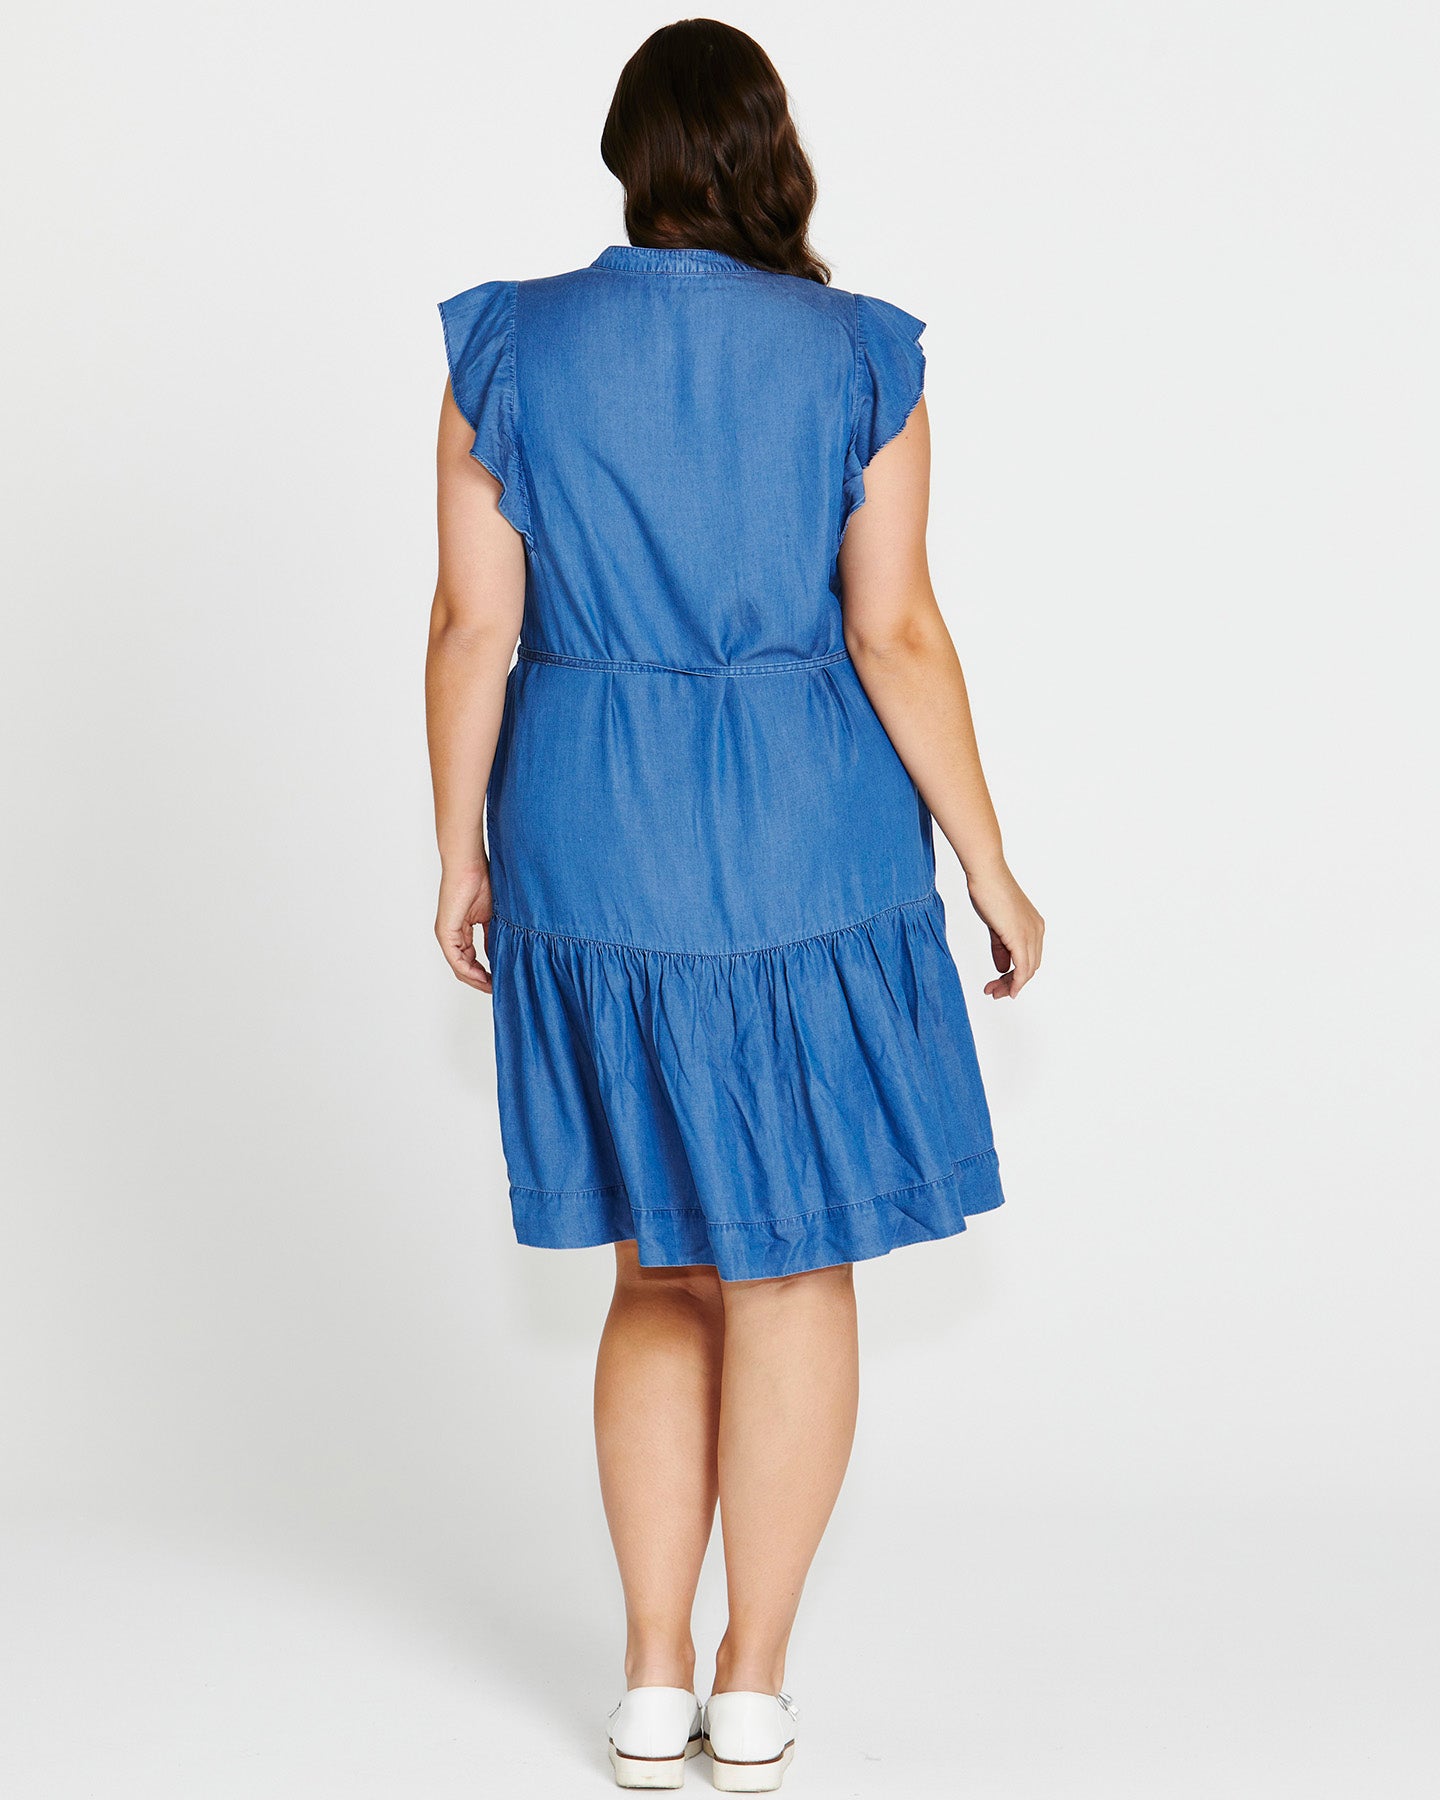 Lorne Ruffle Sleeve Lyocell Above-Knee Dress - Antique Indigo Blue